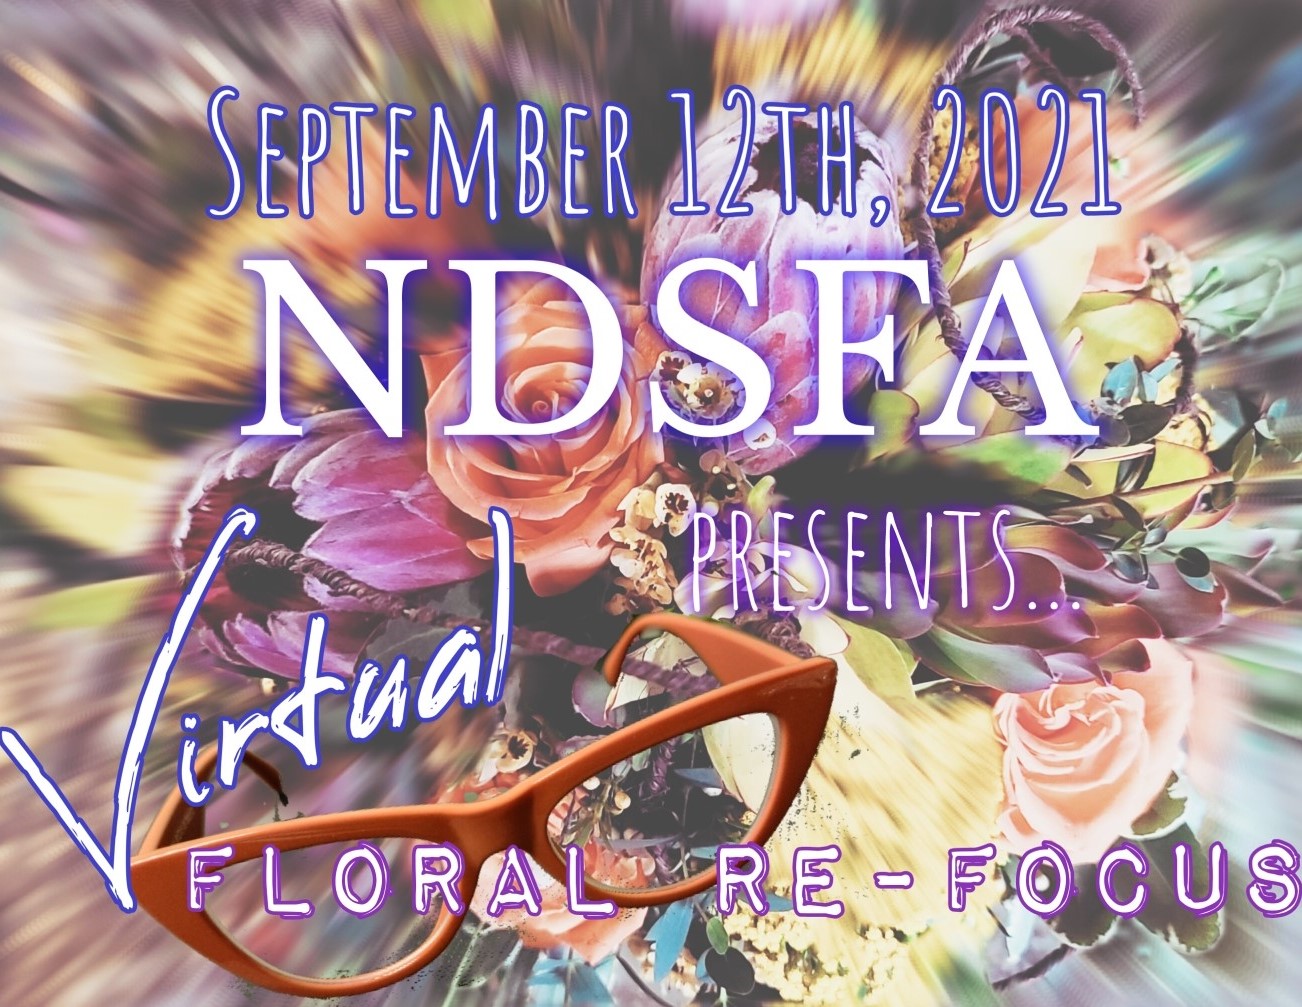 North Dakota Florist Association